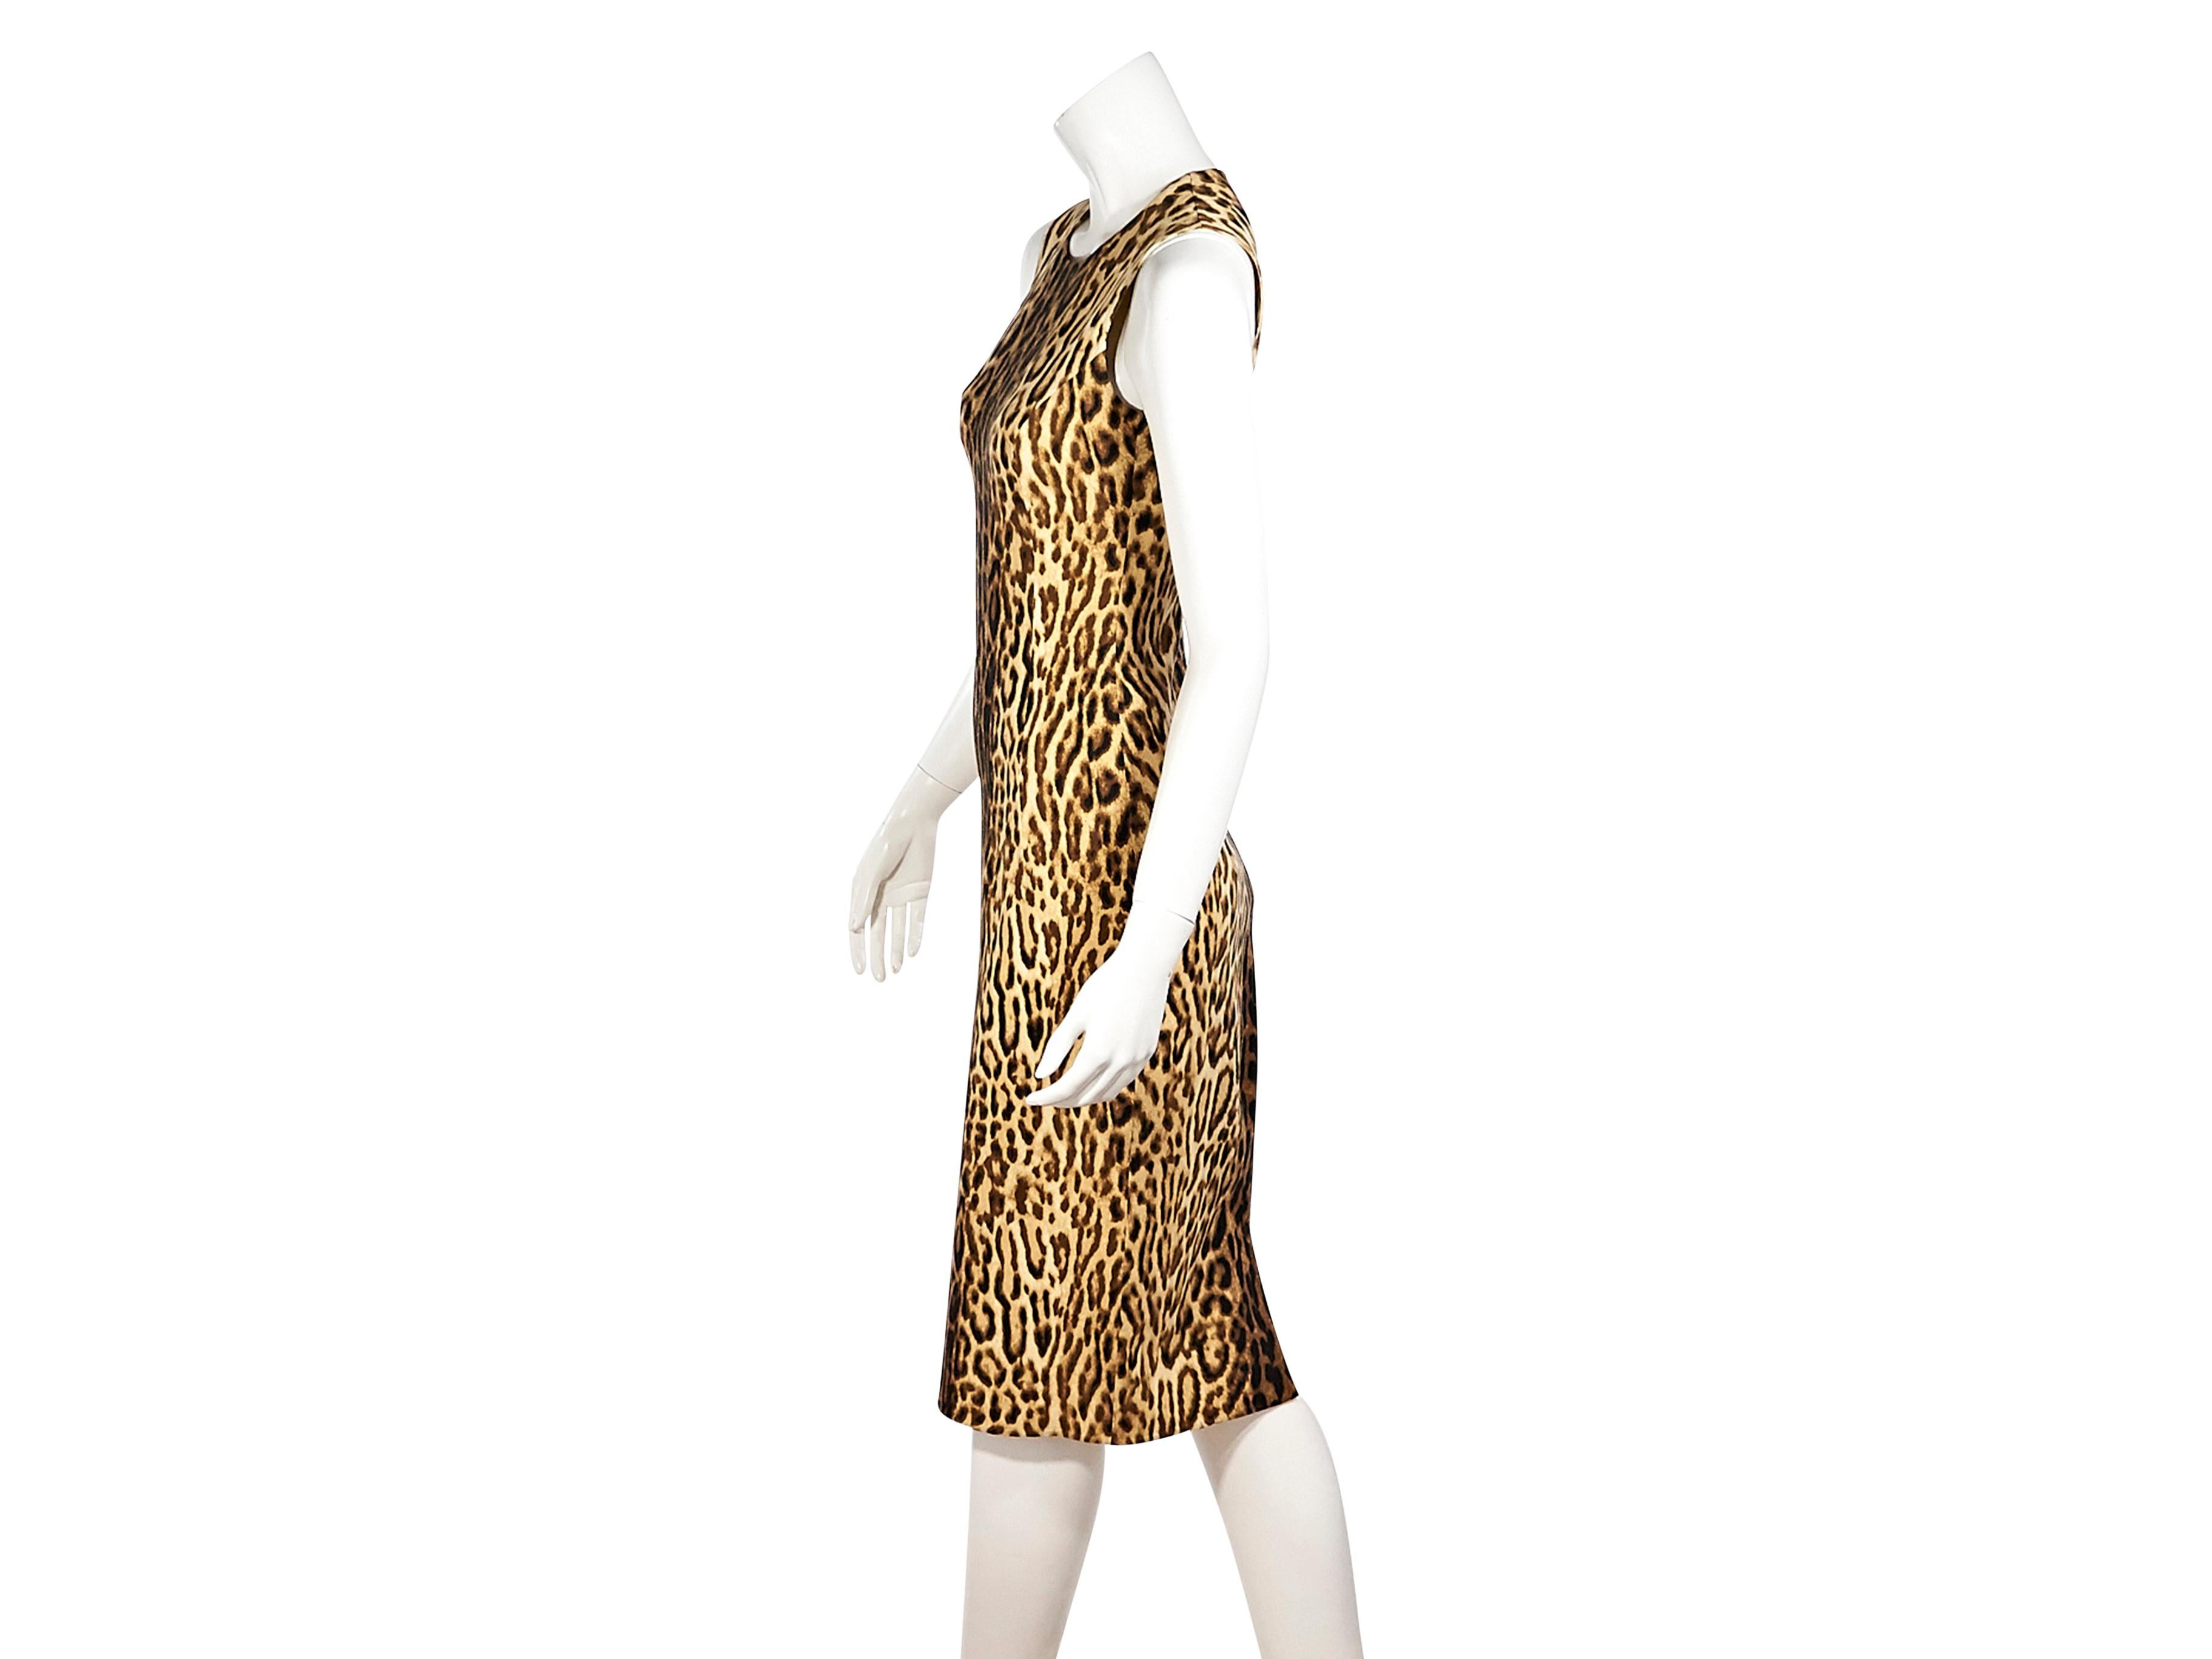 Product details:  Multioclor leopard-printed stretch wool sheath dress by Celine.  From the Phoebe Philo design era.  Jewelneck.  Sleeveless.  Concealed back zip closure.  Back center hem slit.  Label size FR 36.  36